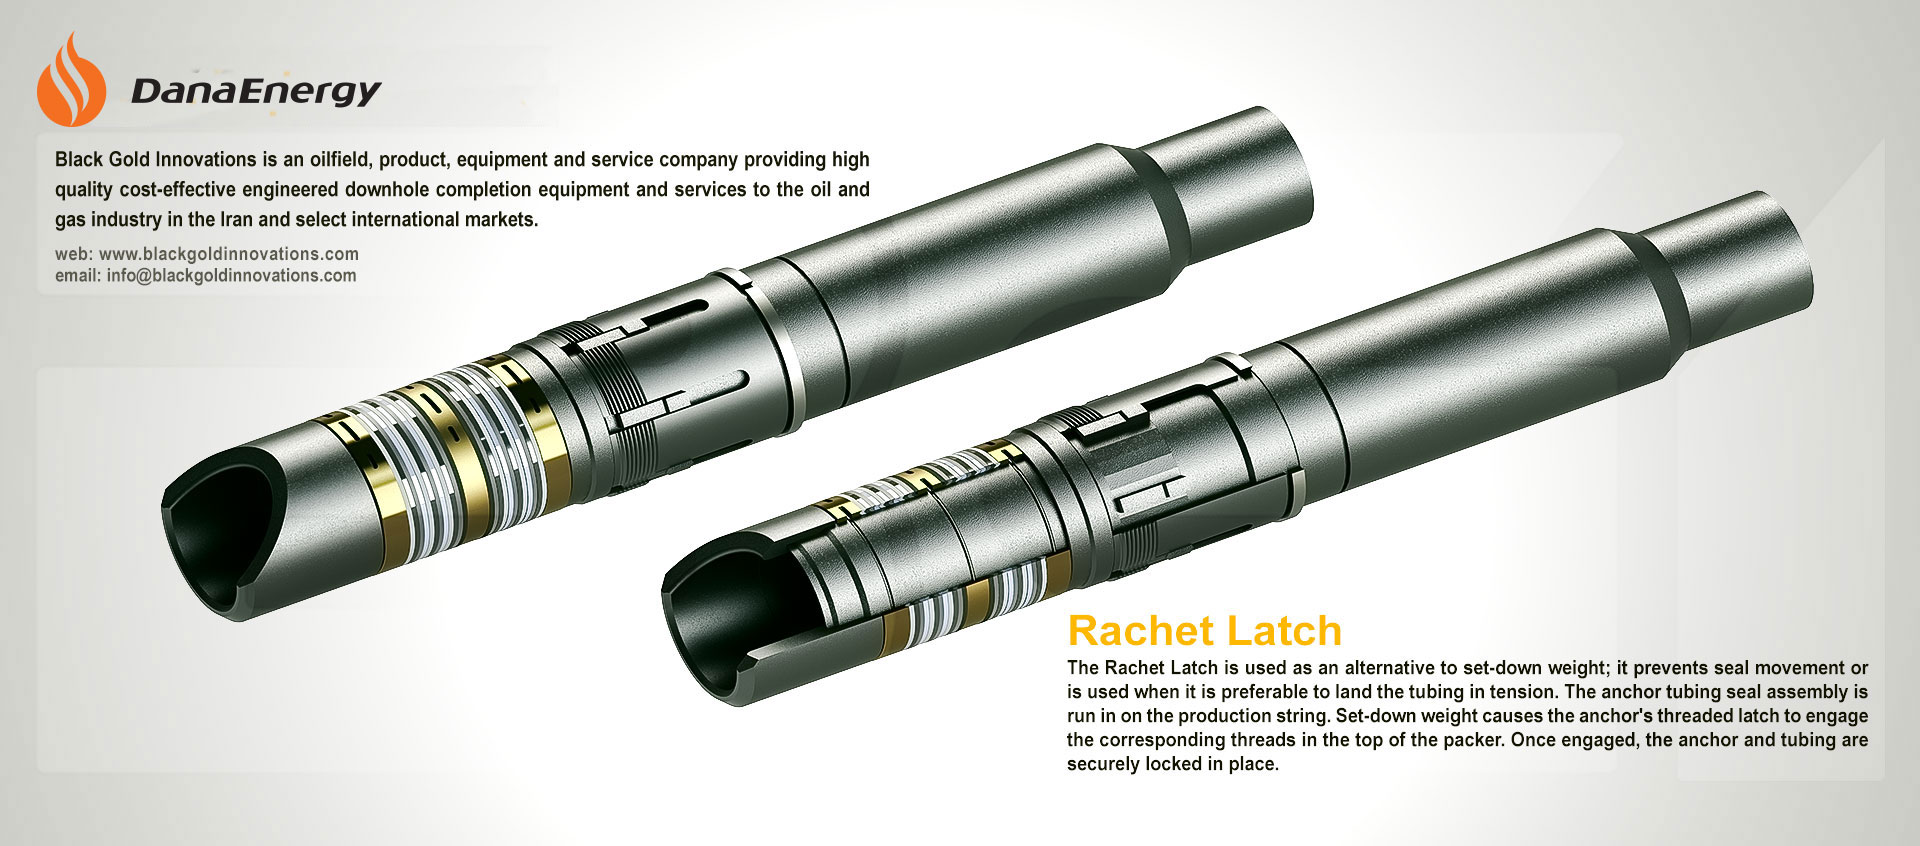 Rachet Latch